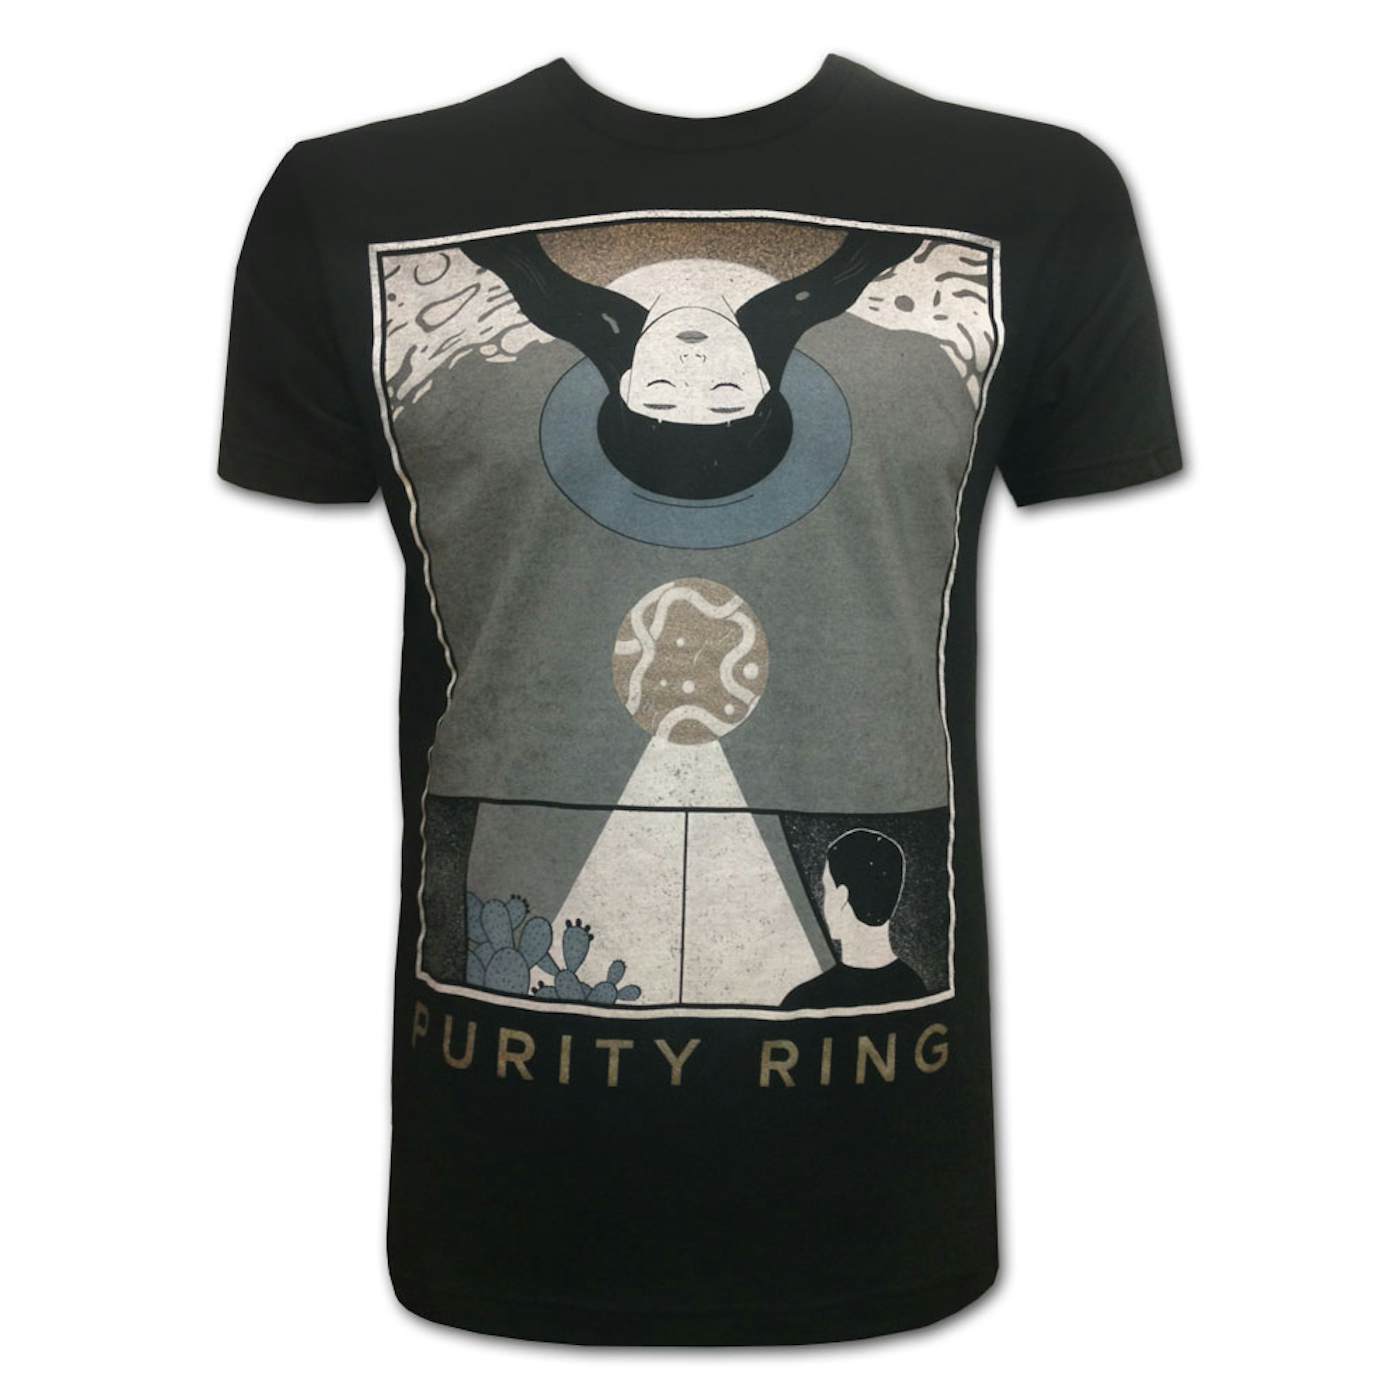 Purity Ring Metallic Higher Being T-shirt